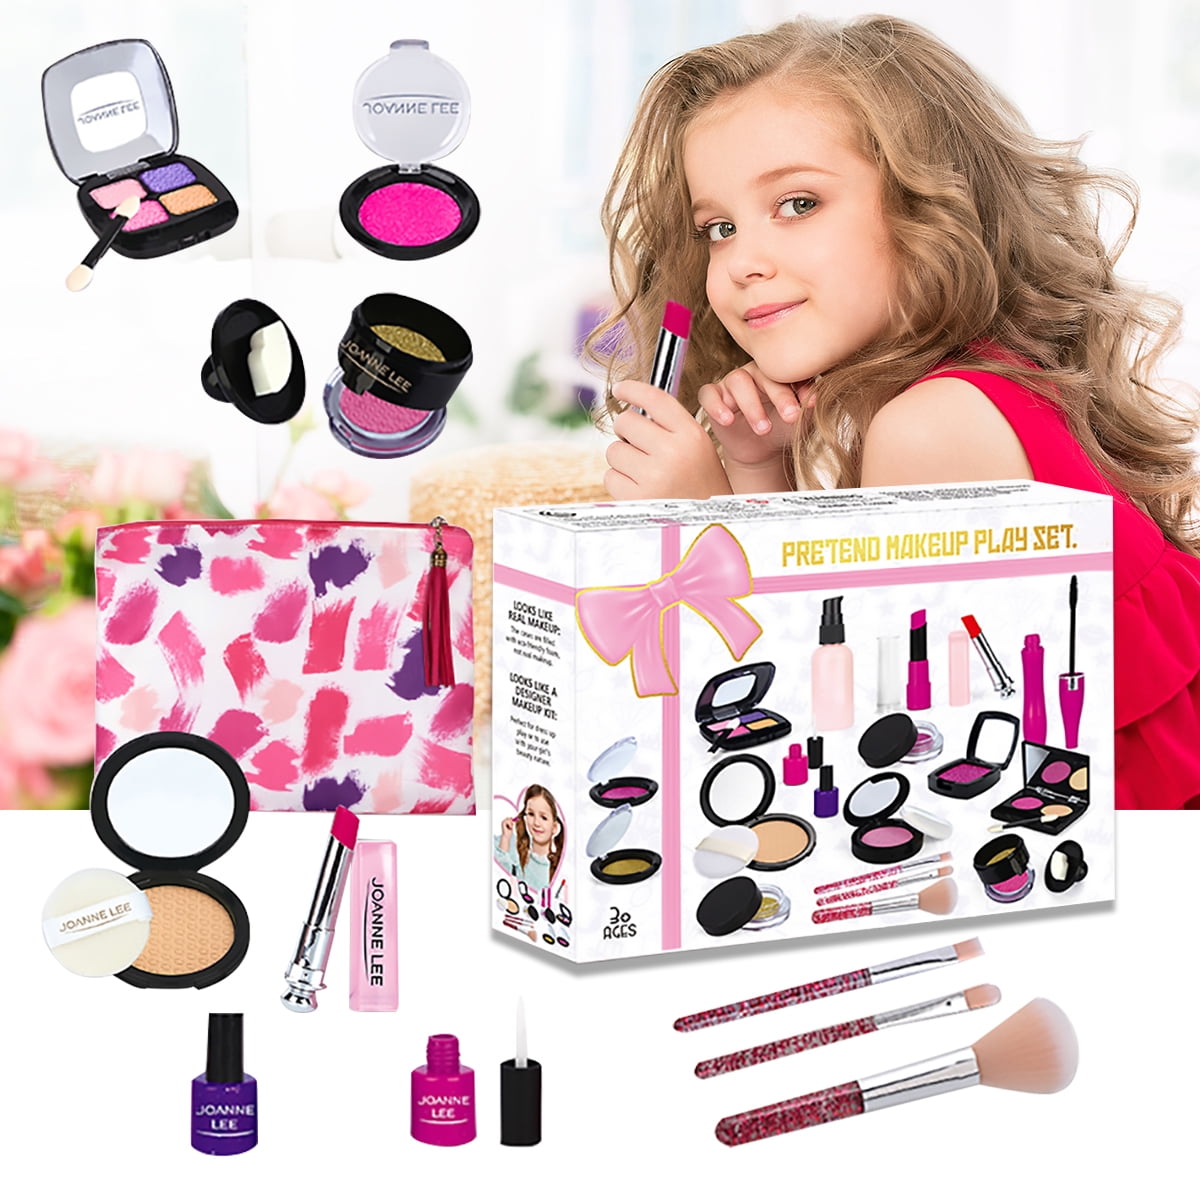 33pcs Pretend Kids Princess Make Up Gift Set,NON-TOXIC Makeup Toys Kit for Girls 